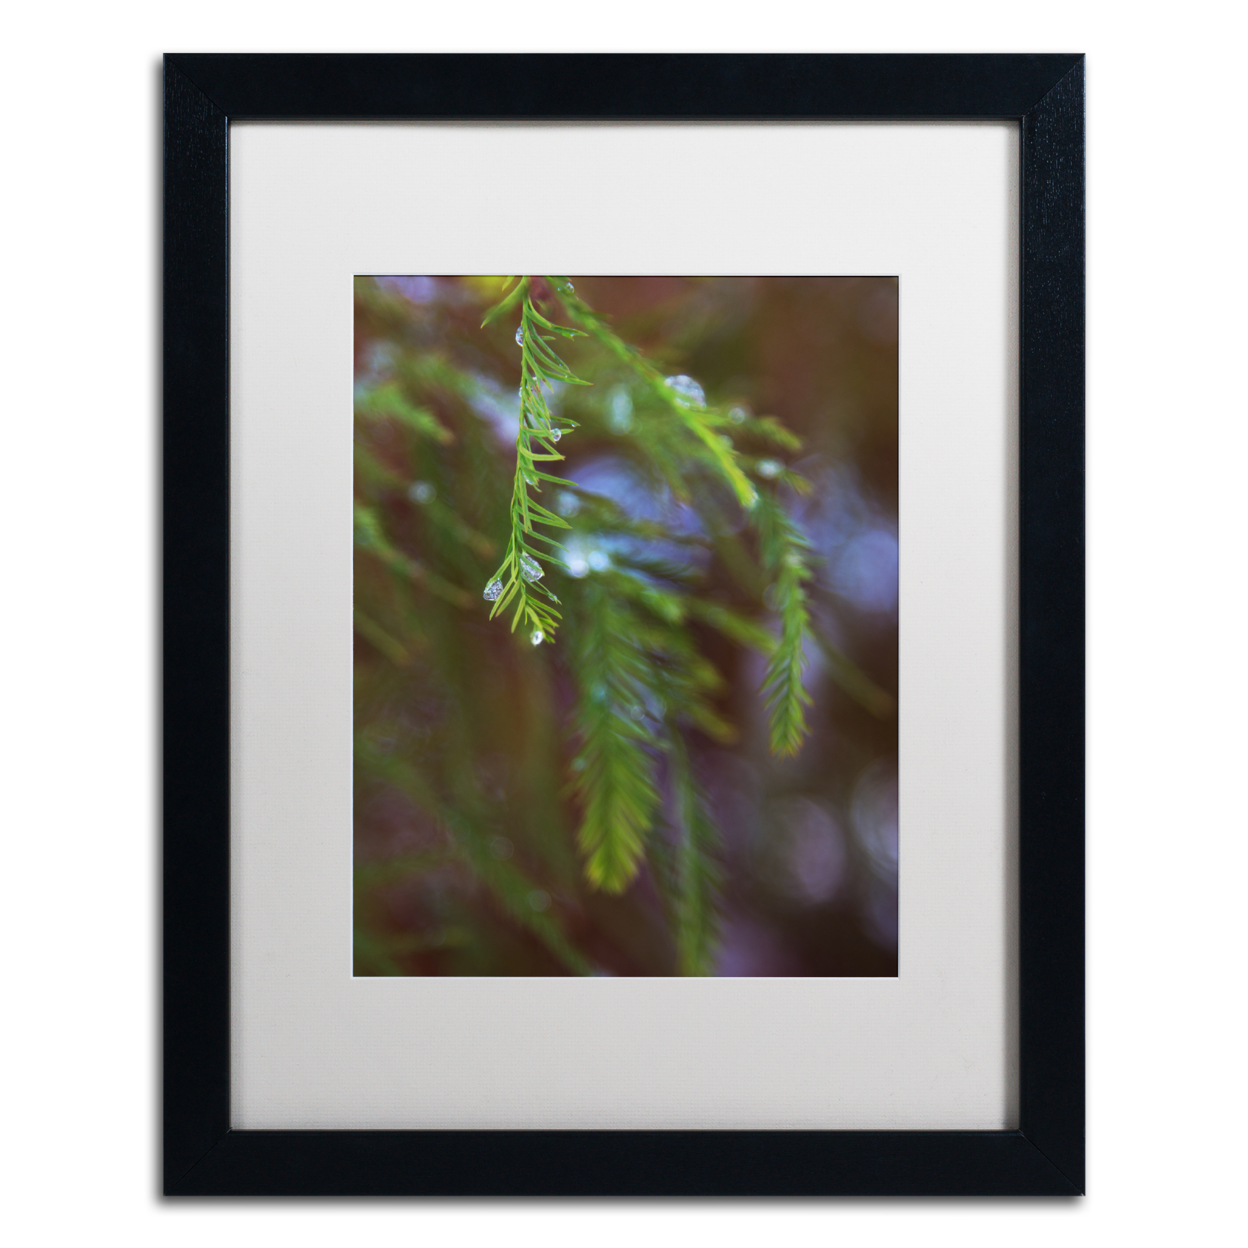 Kurt Shaffer 'Ice Droplets On Redwood Tree Foliage' Black Wooden Framed Art 18 X 22 Inches